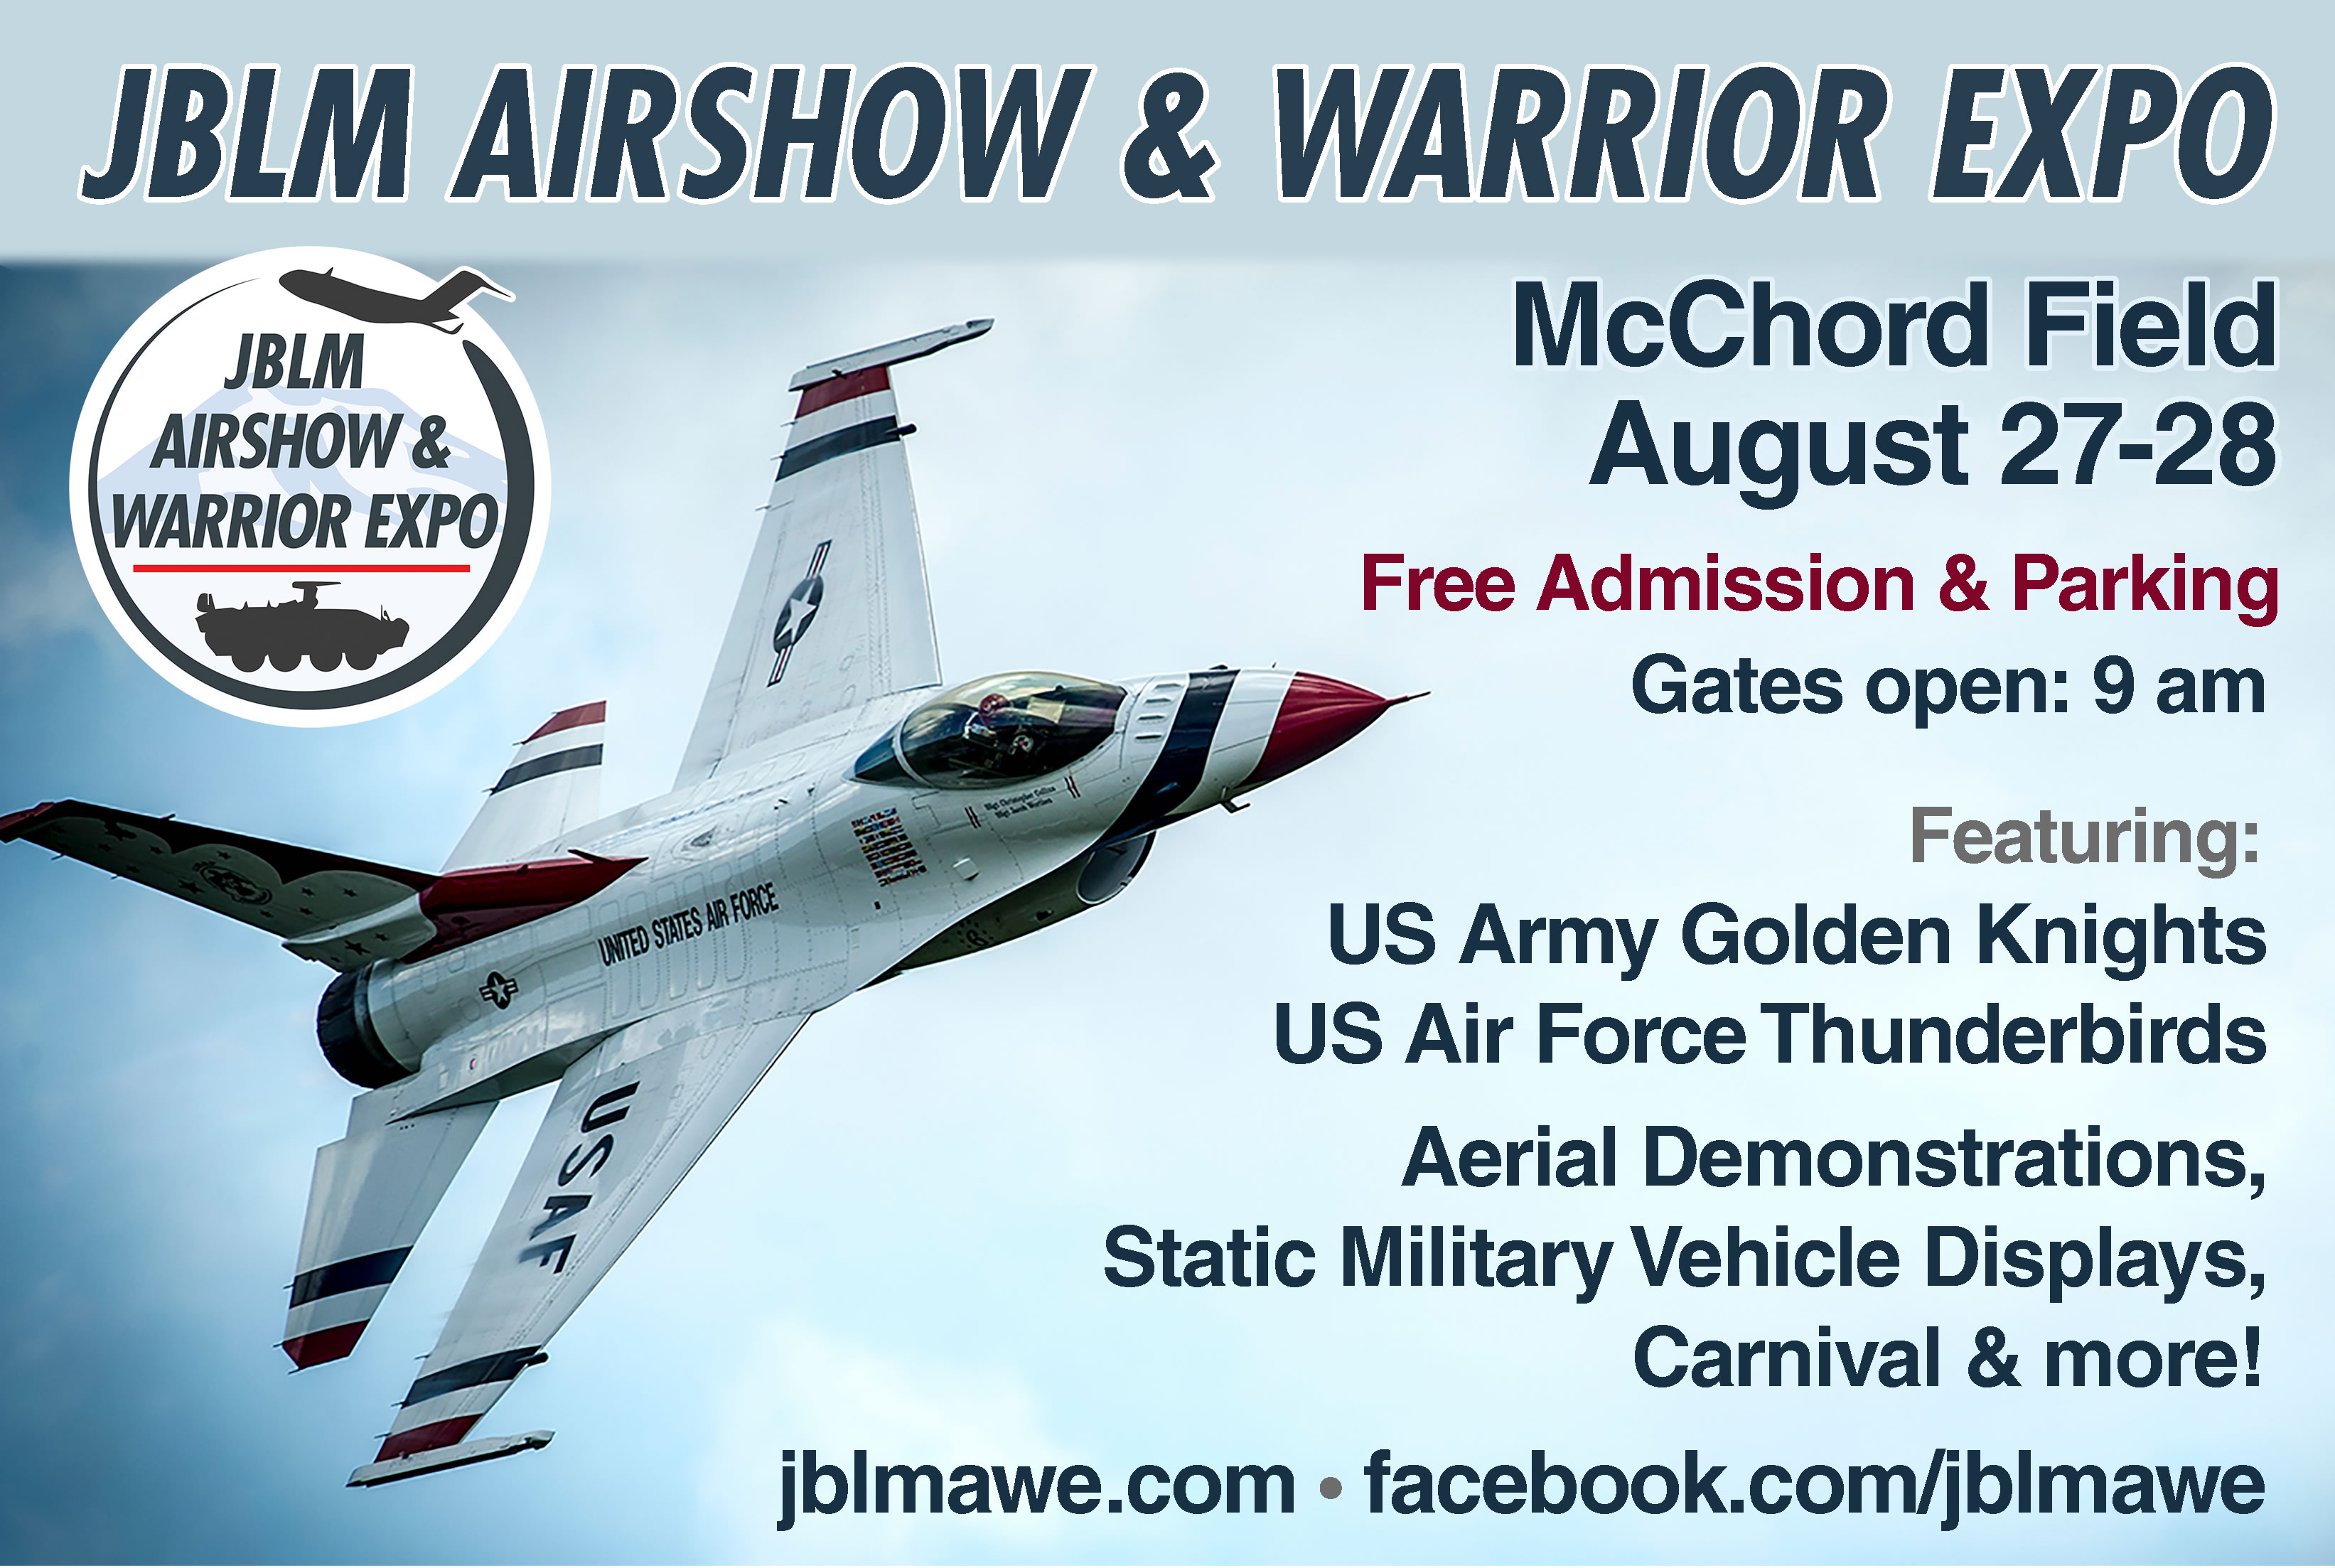 JBLM Airshow & Warrior Expo